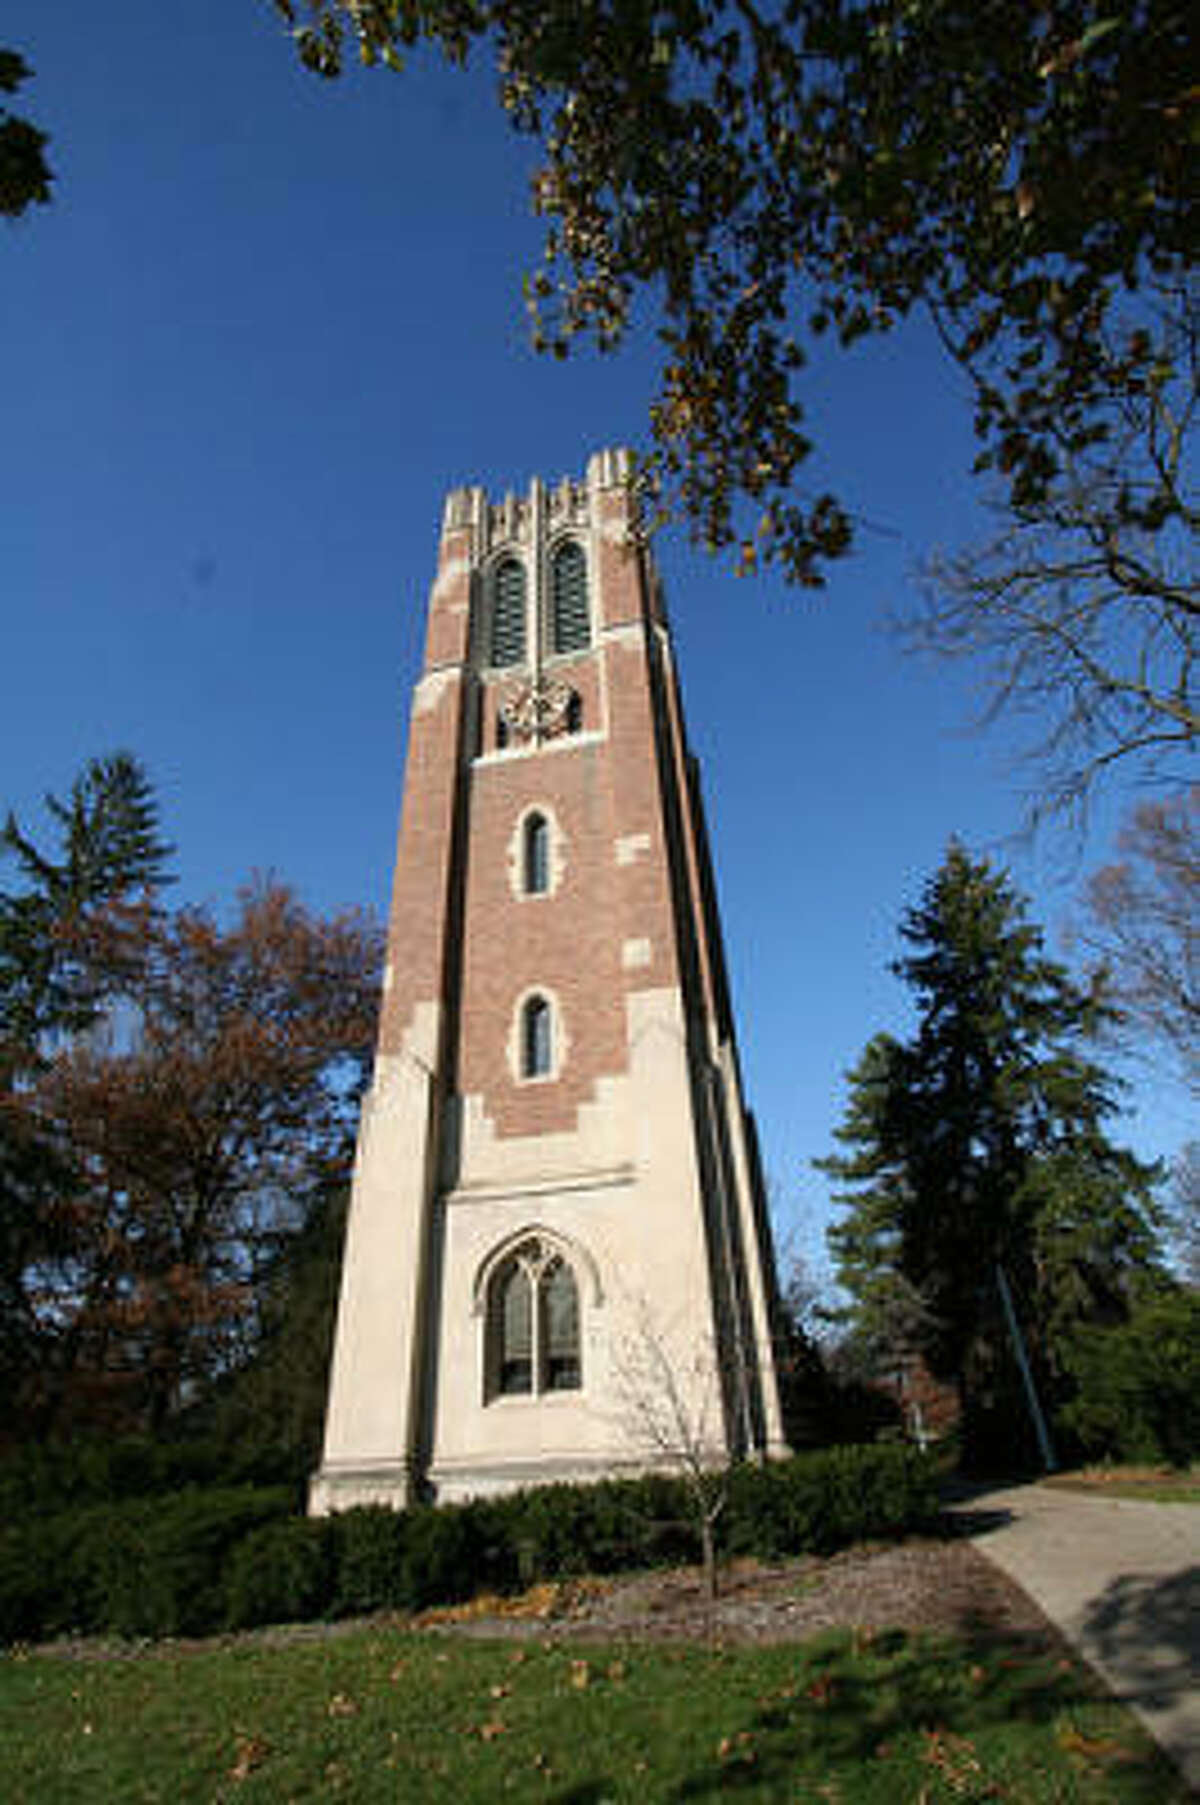 School: Michigan State University Population: 37,454 Source: US News